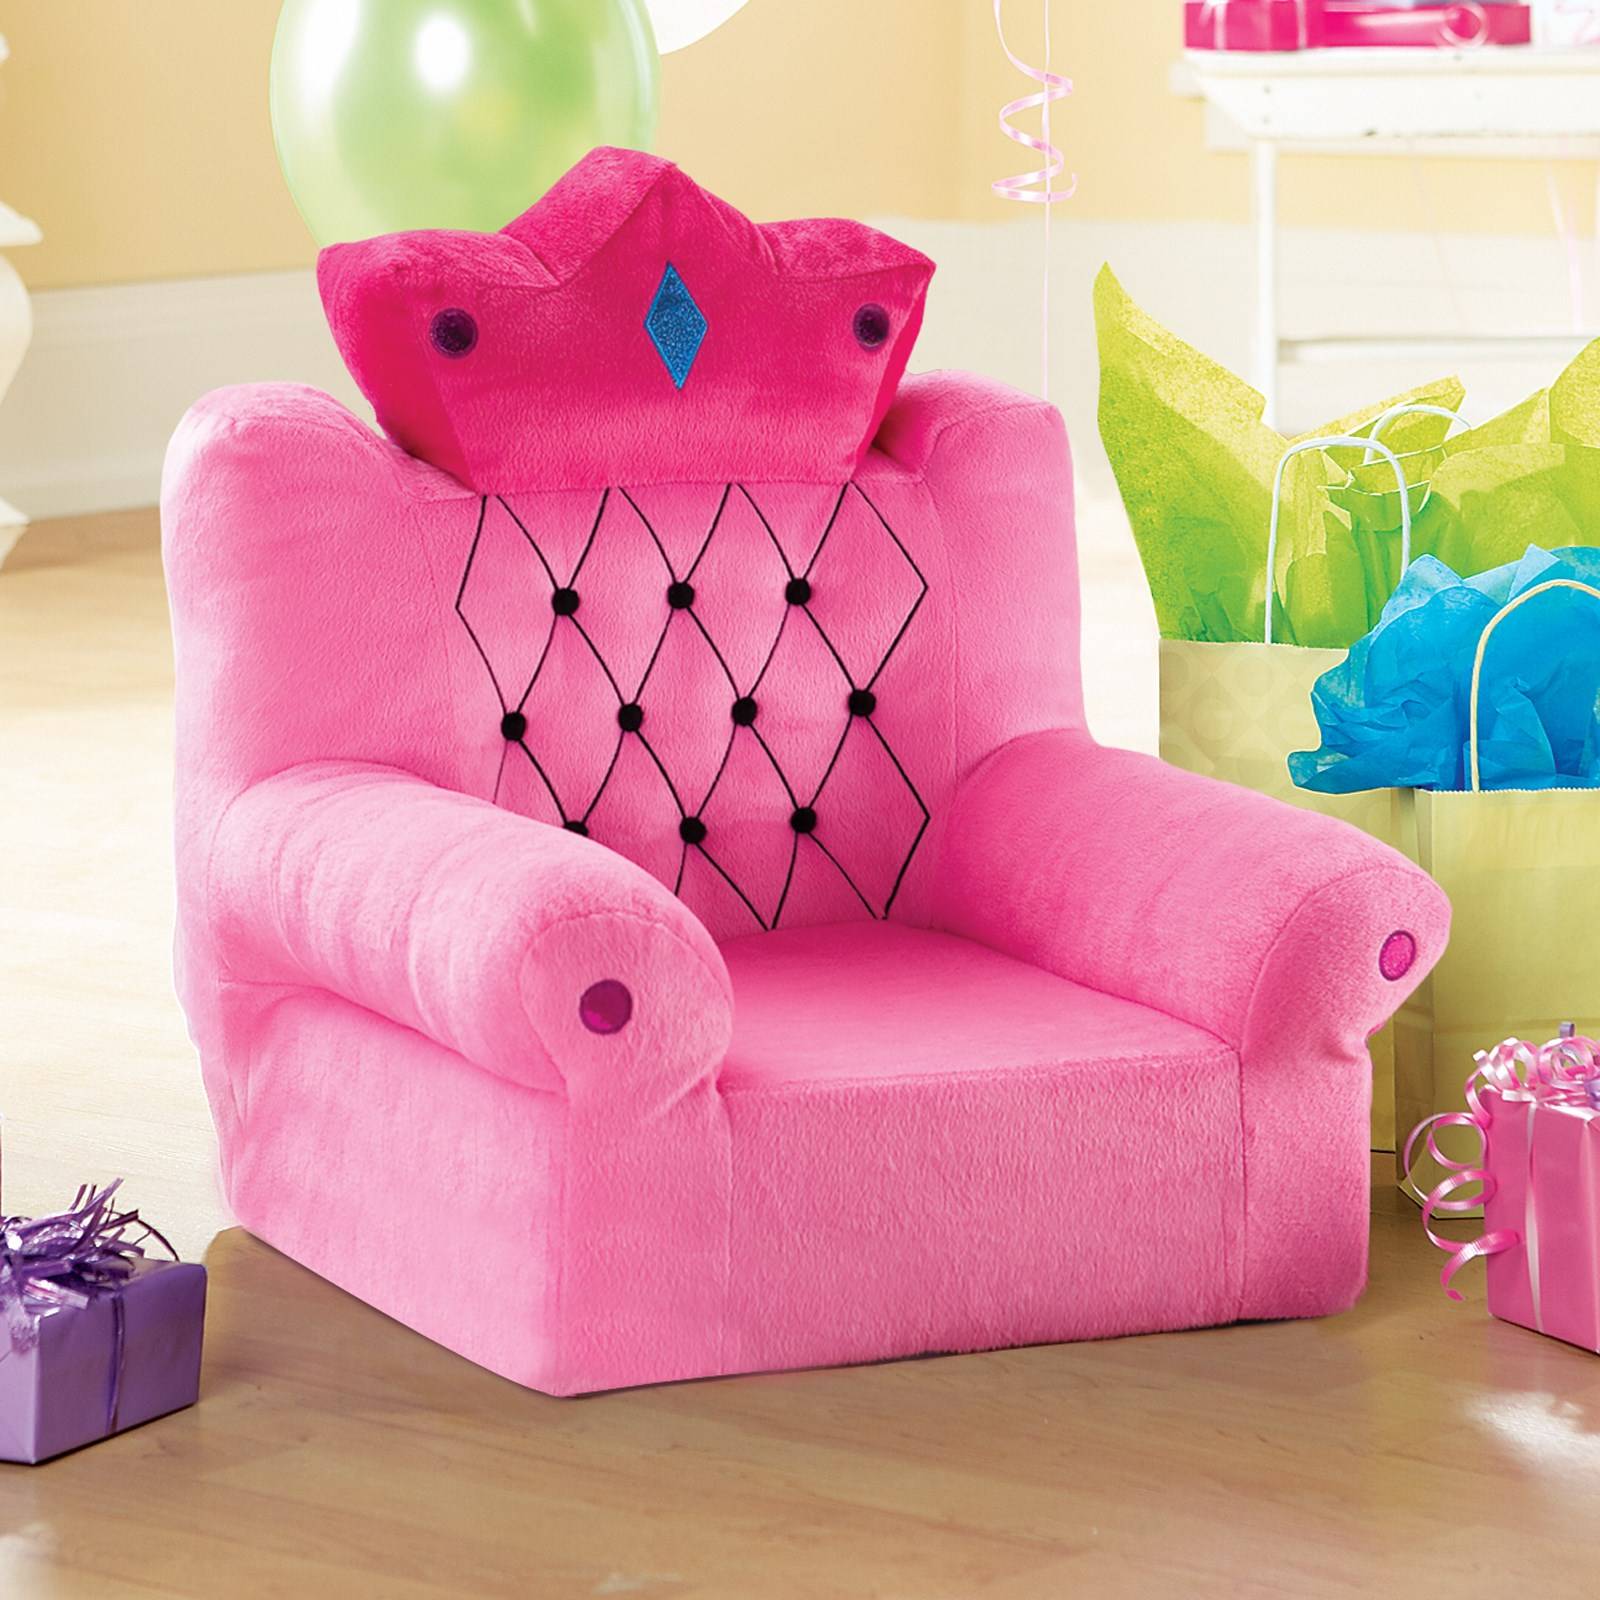 pink-princess-throne-bx-43772.jpg